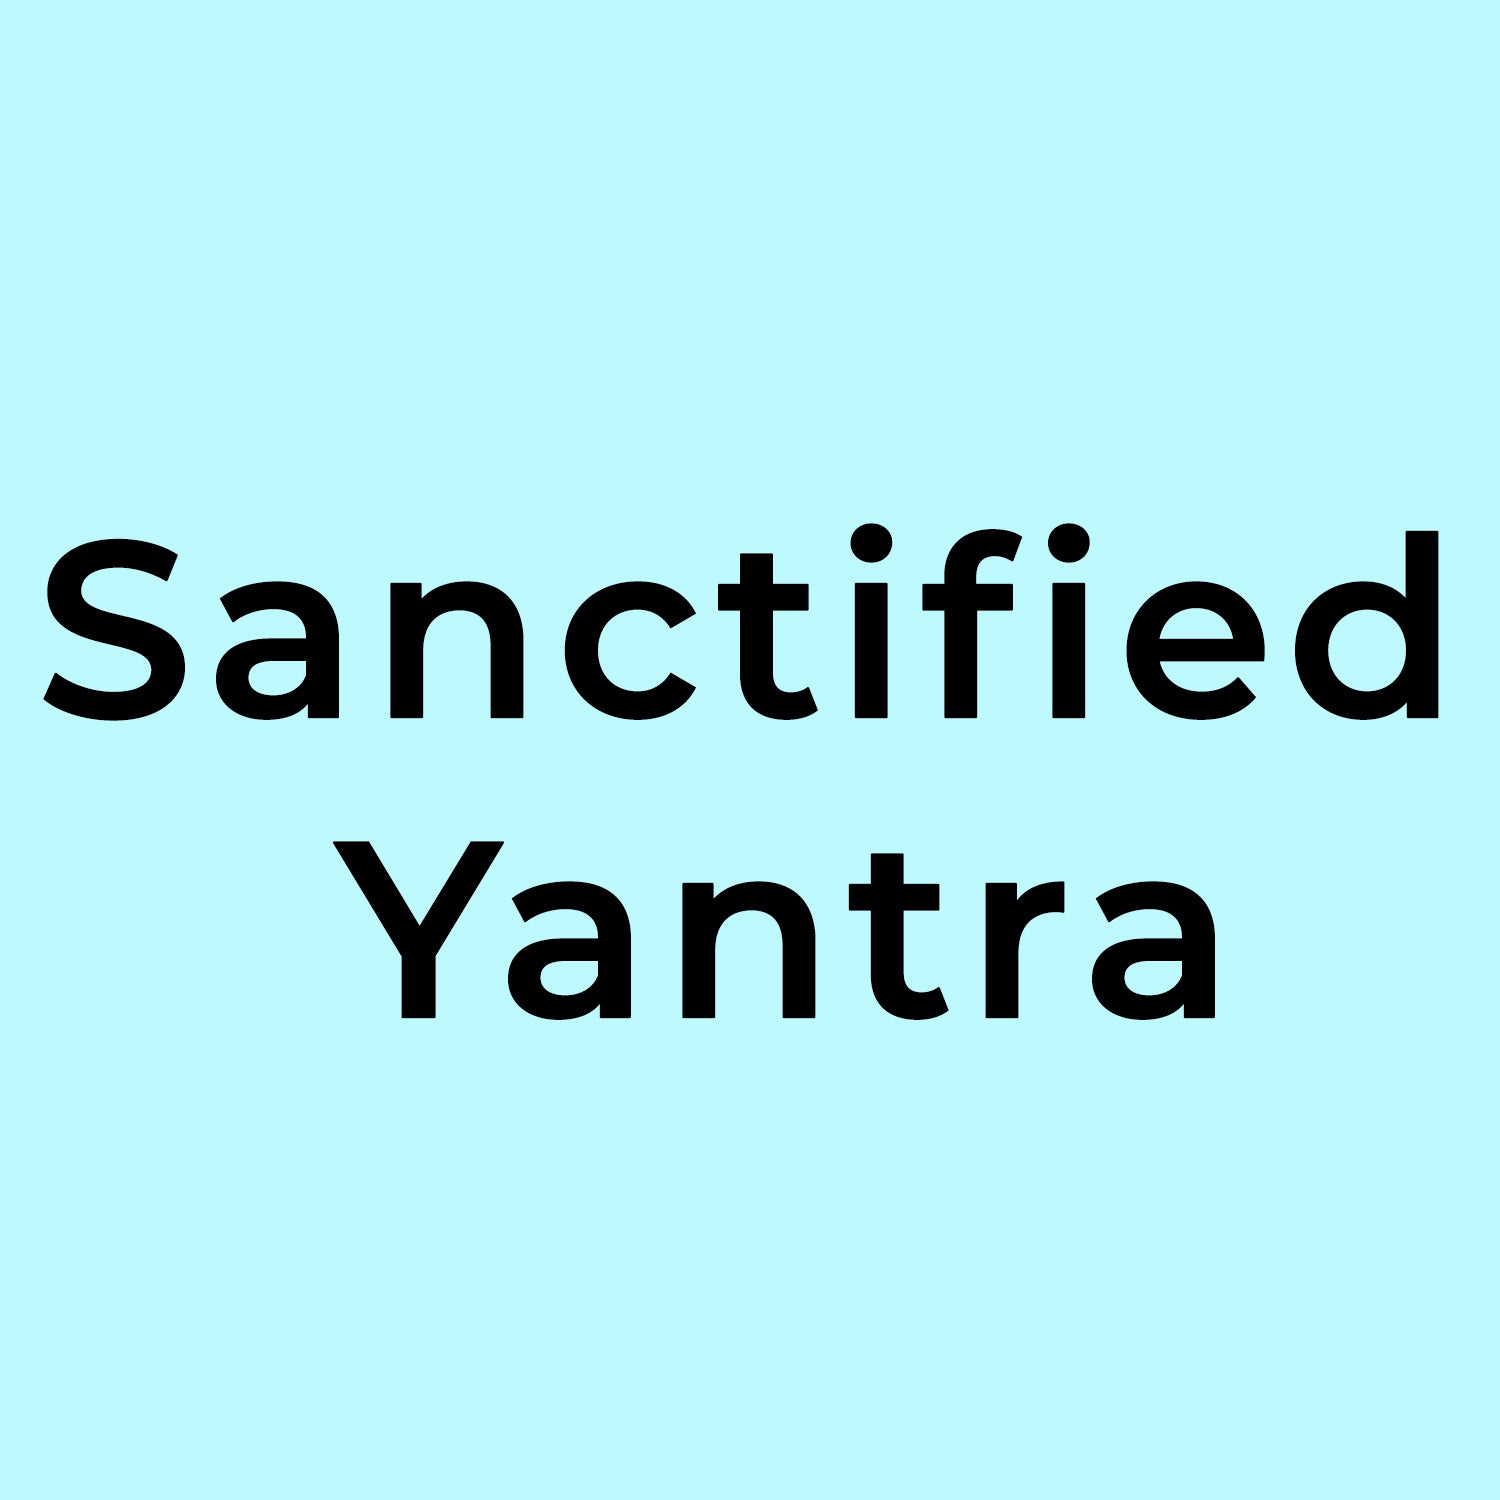 Sanctified Yantra